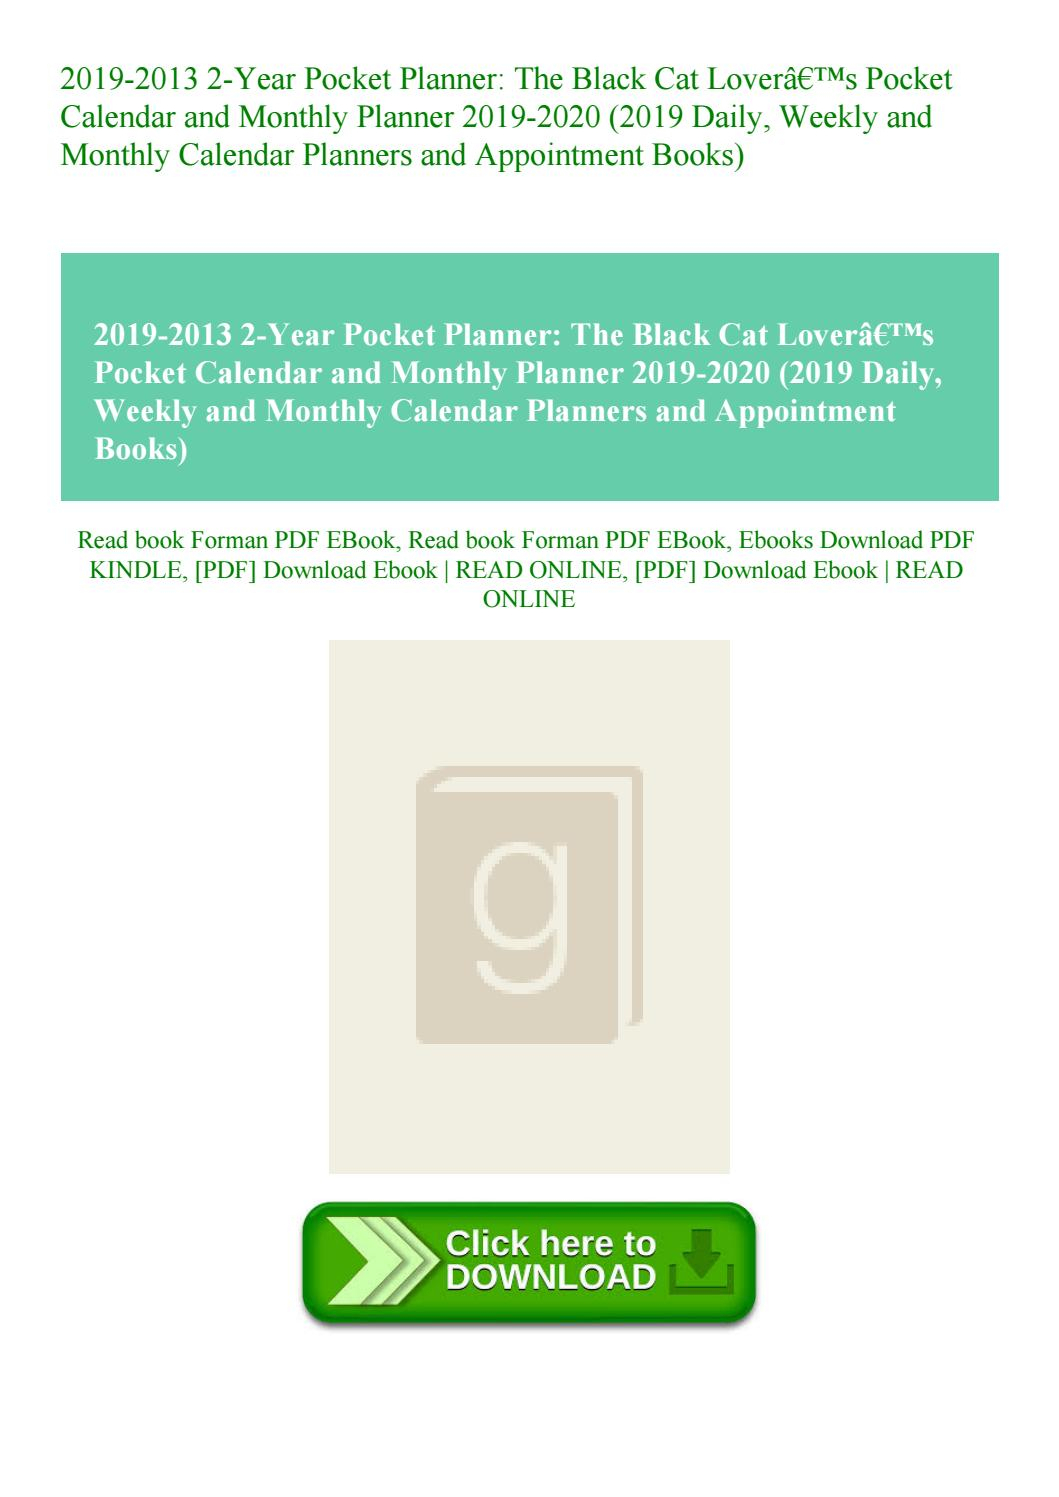 2019-2013 2-Year Pocket Planner The Black Cat Loverâ€™S